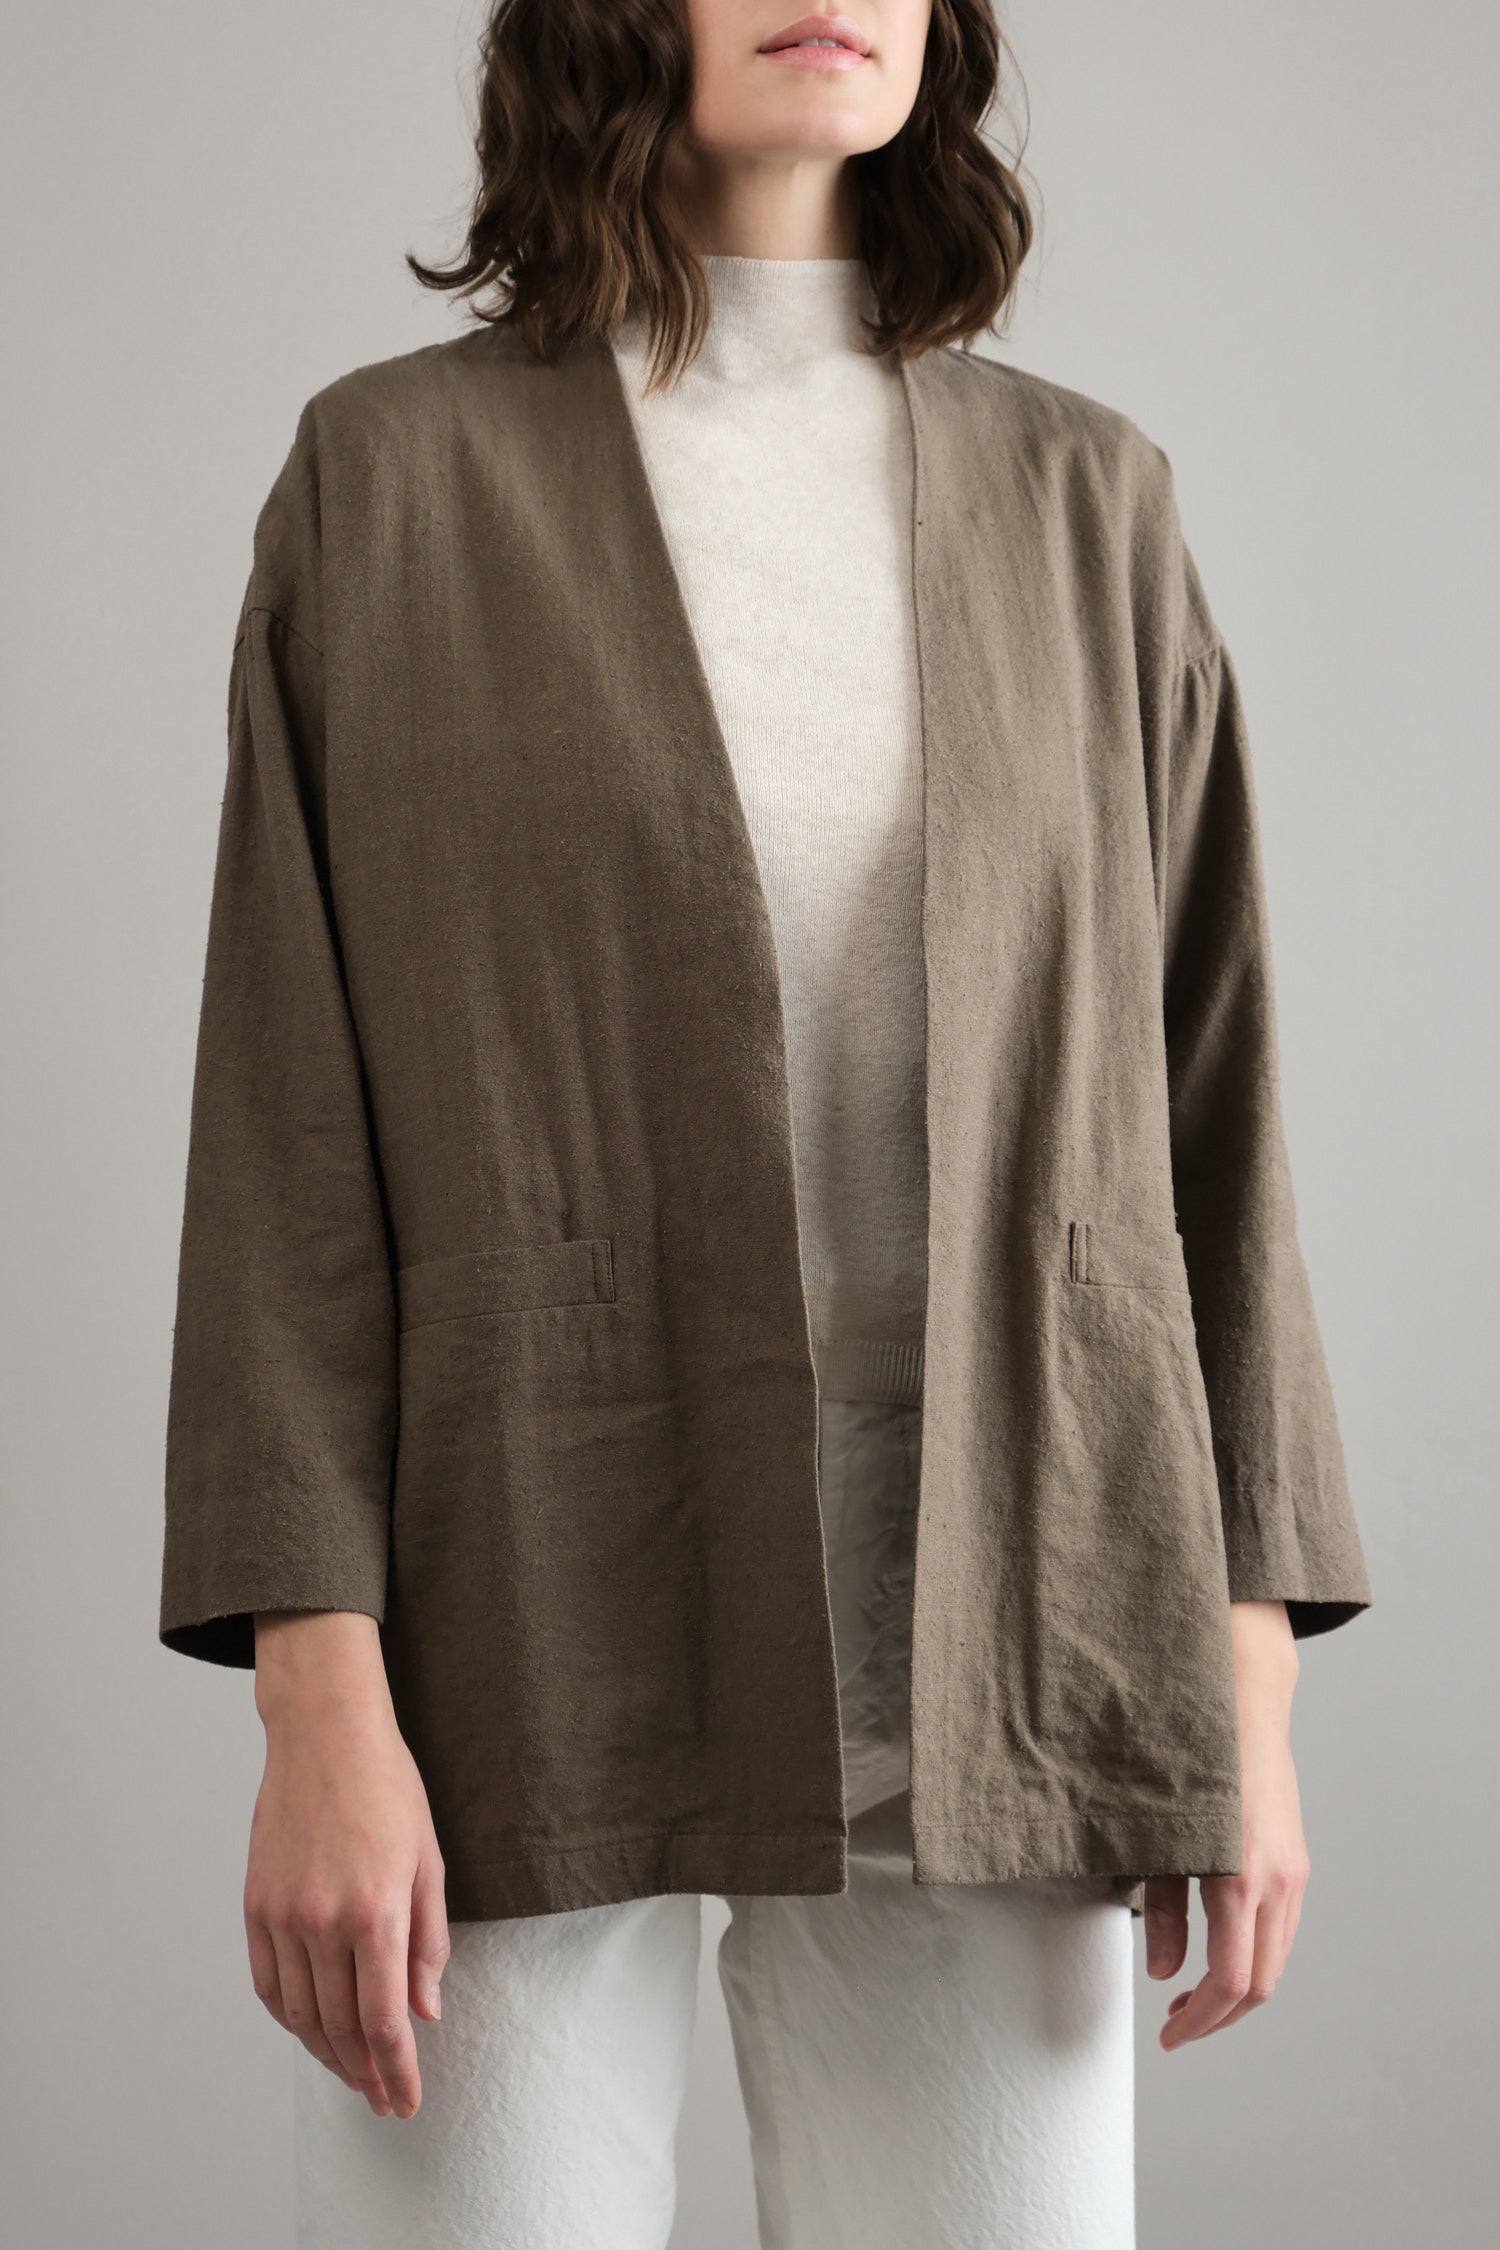 Silk Linen Jacket in Brown